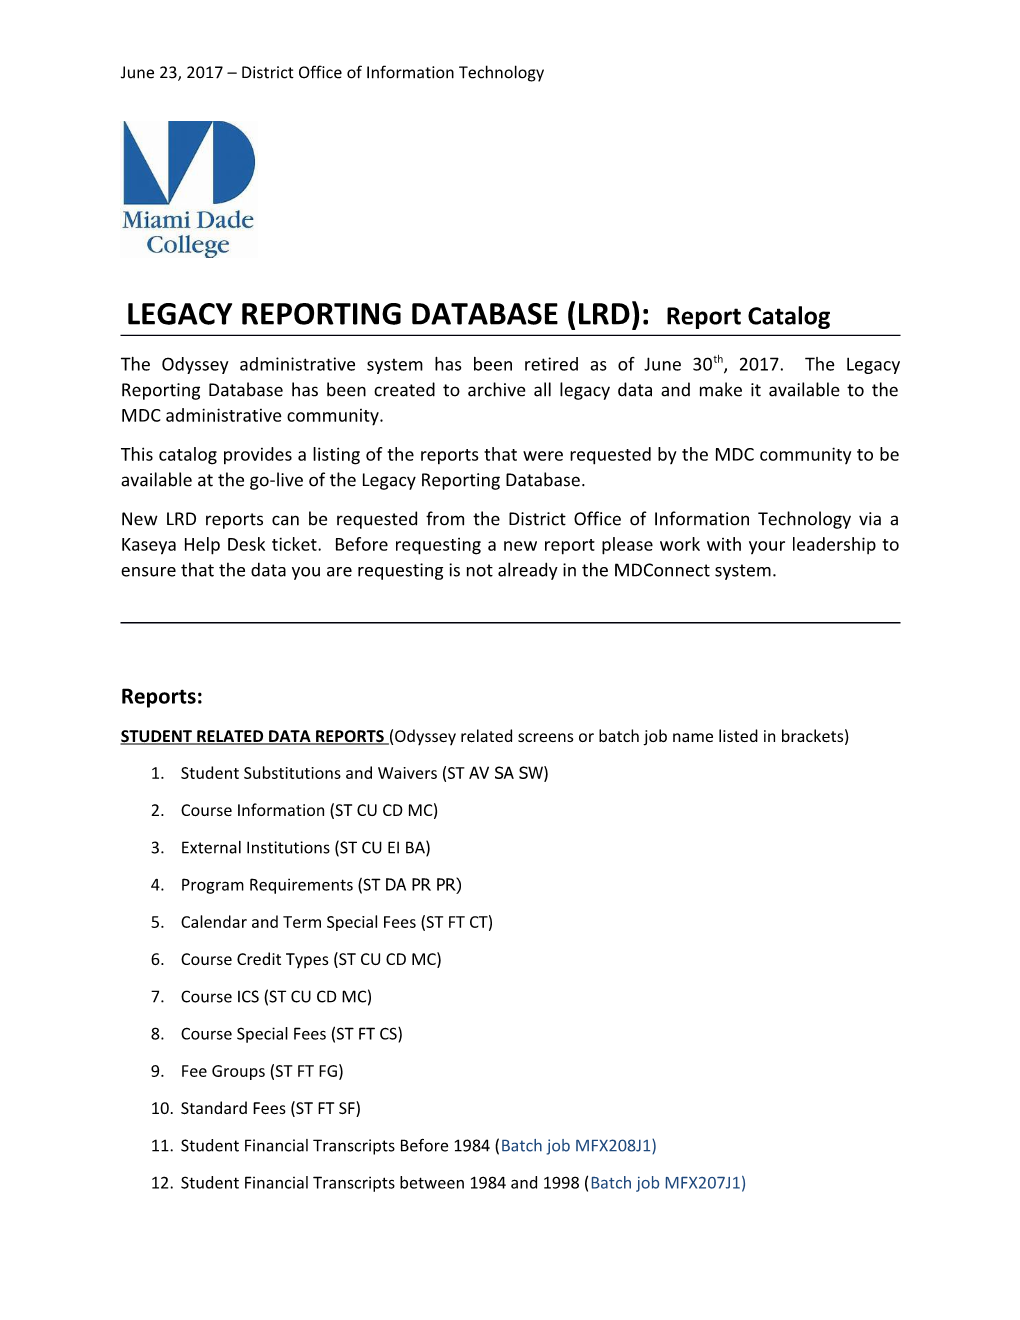 LEGACY REPORTING DATABASE (LRD): Report Catalog